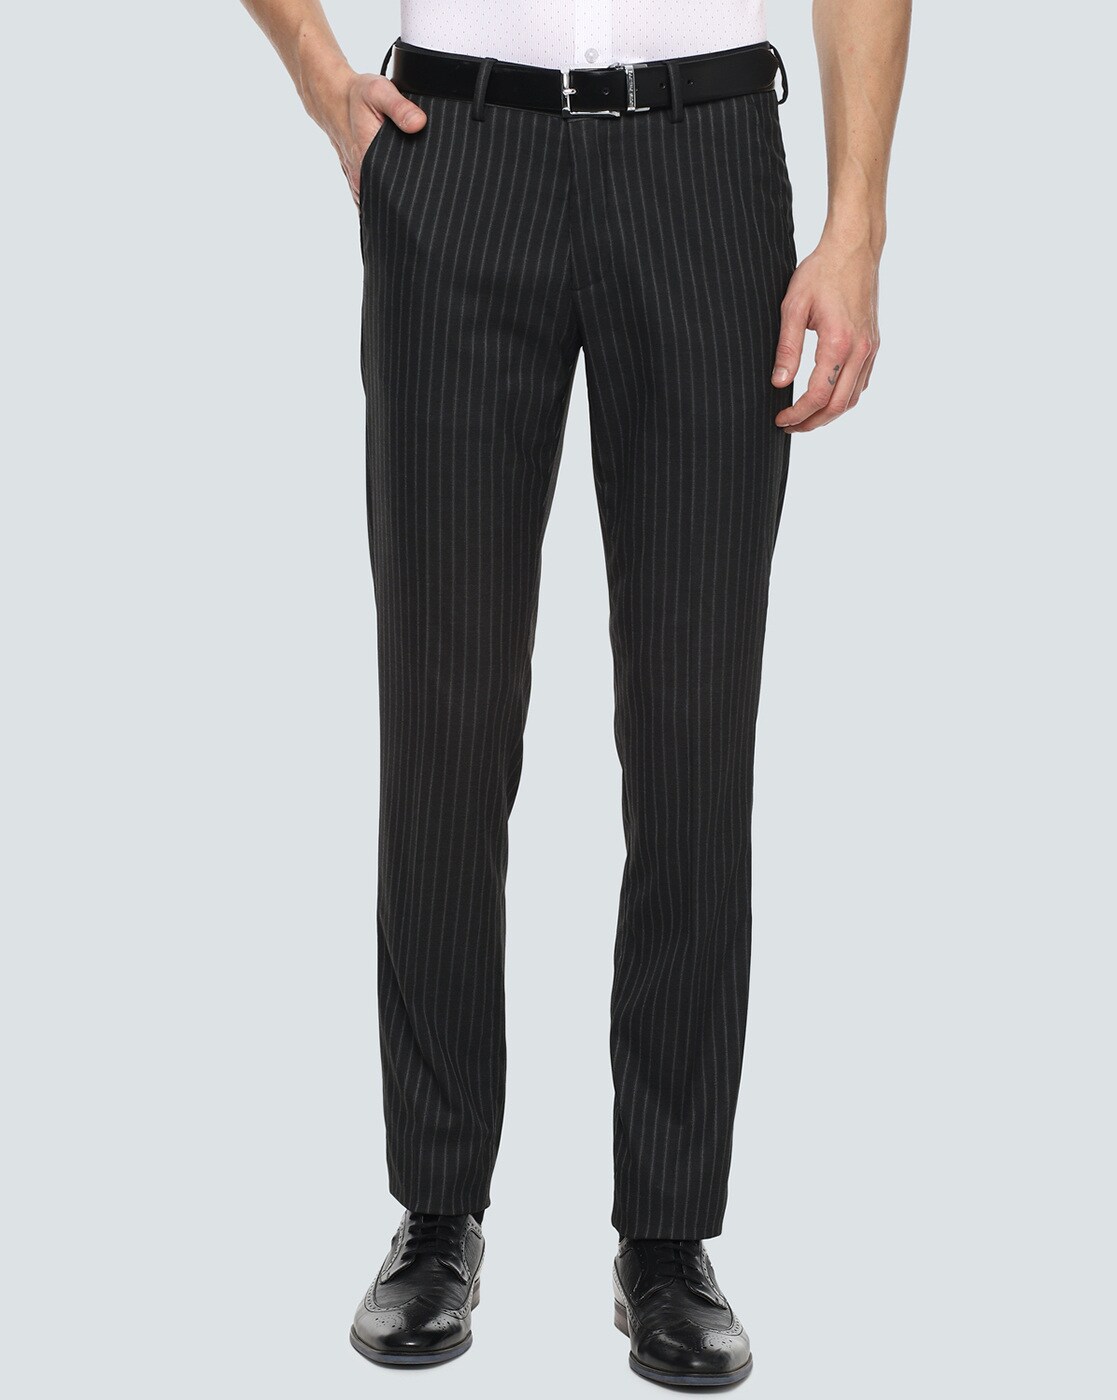 WATELLO Slim Fit Men Grey Black Trousers  Buy WATELLO Slim Fit Men Grey Black  Trousers Online at Best Prices in India  Flipkartcom